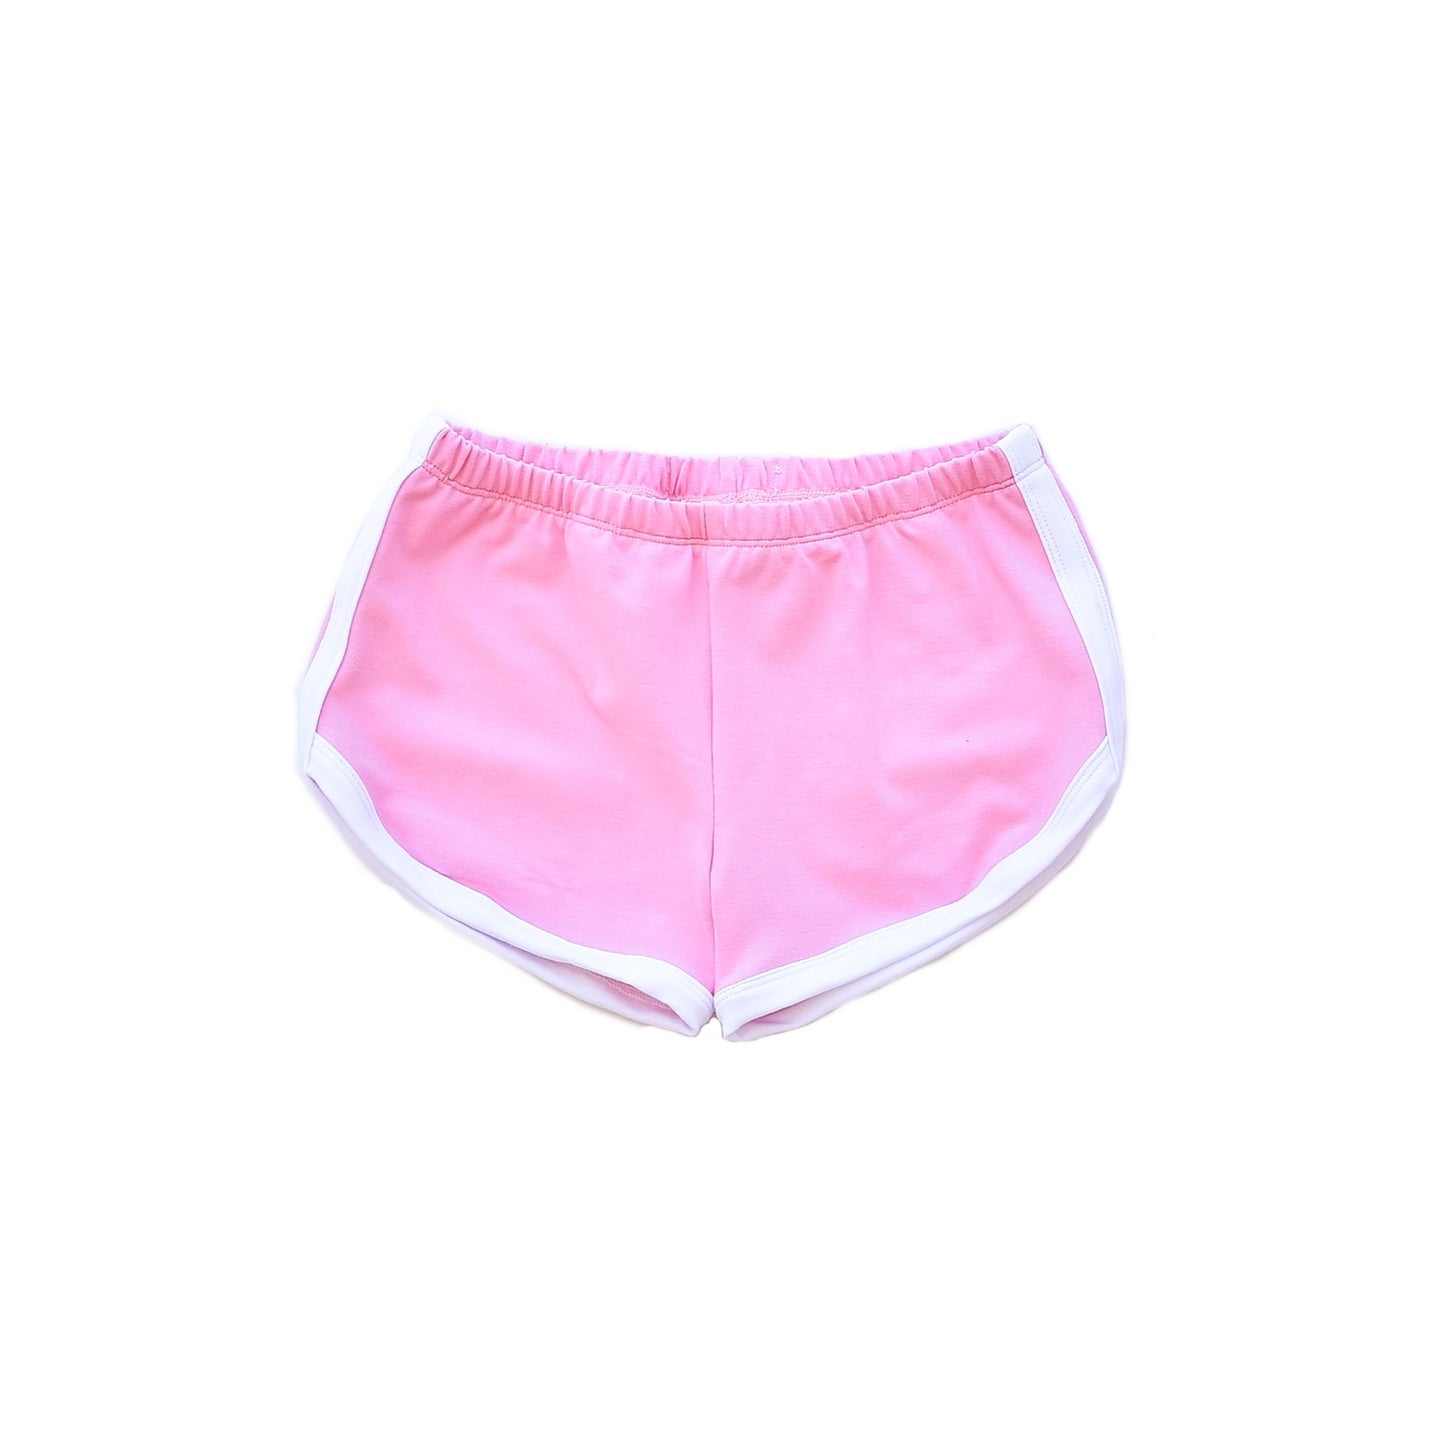 Retro Shorts - Pink